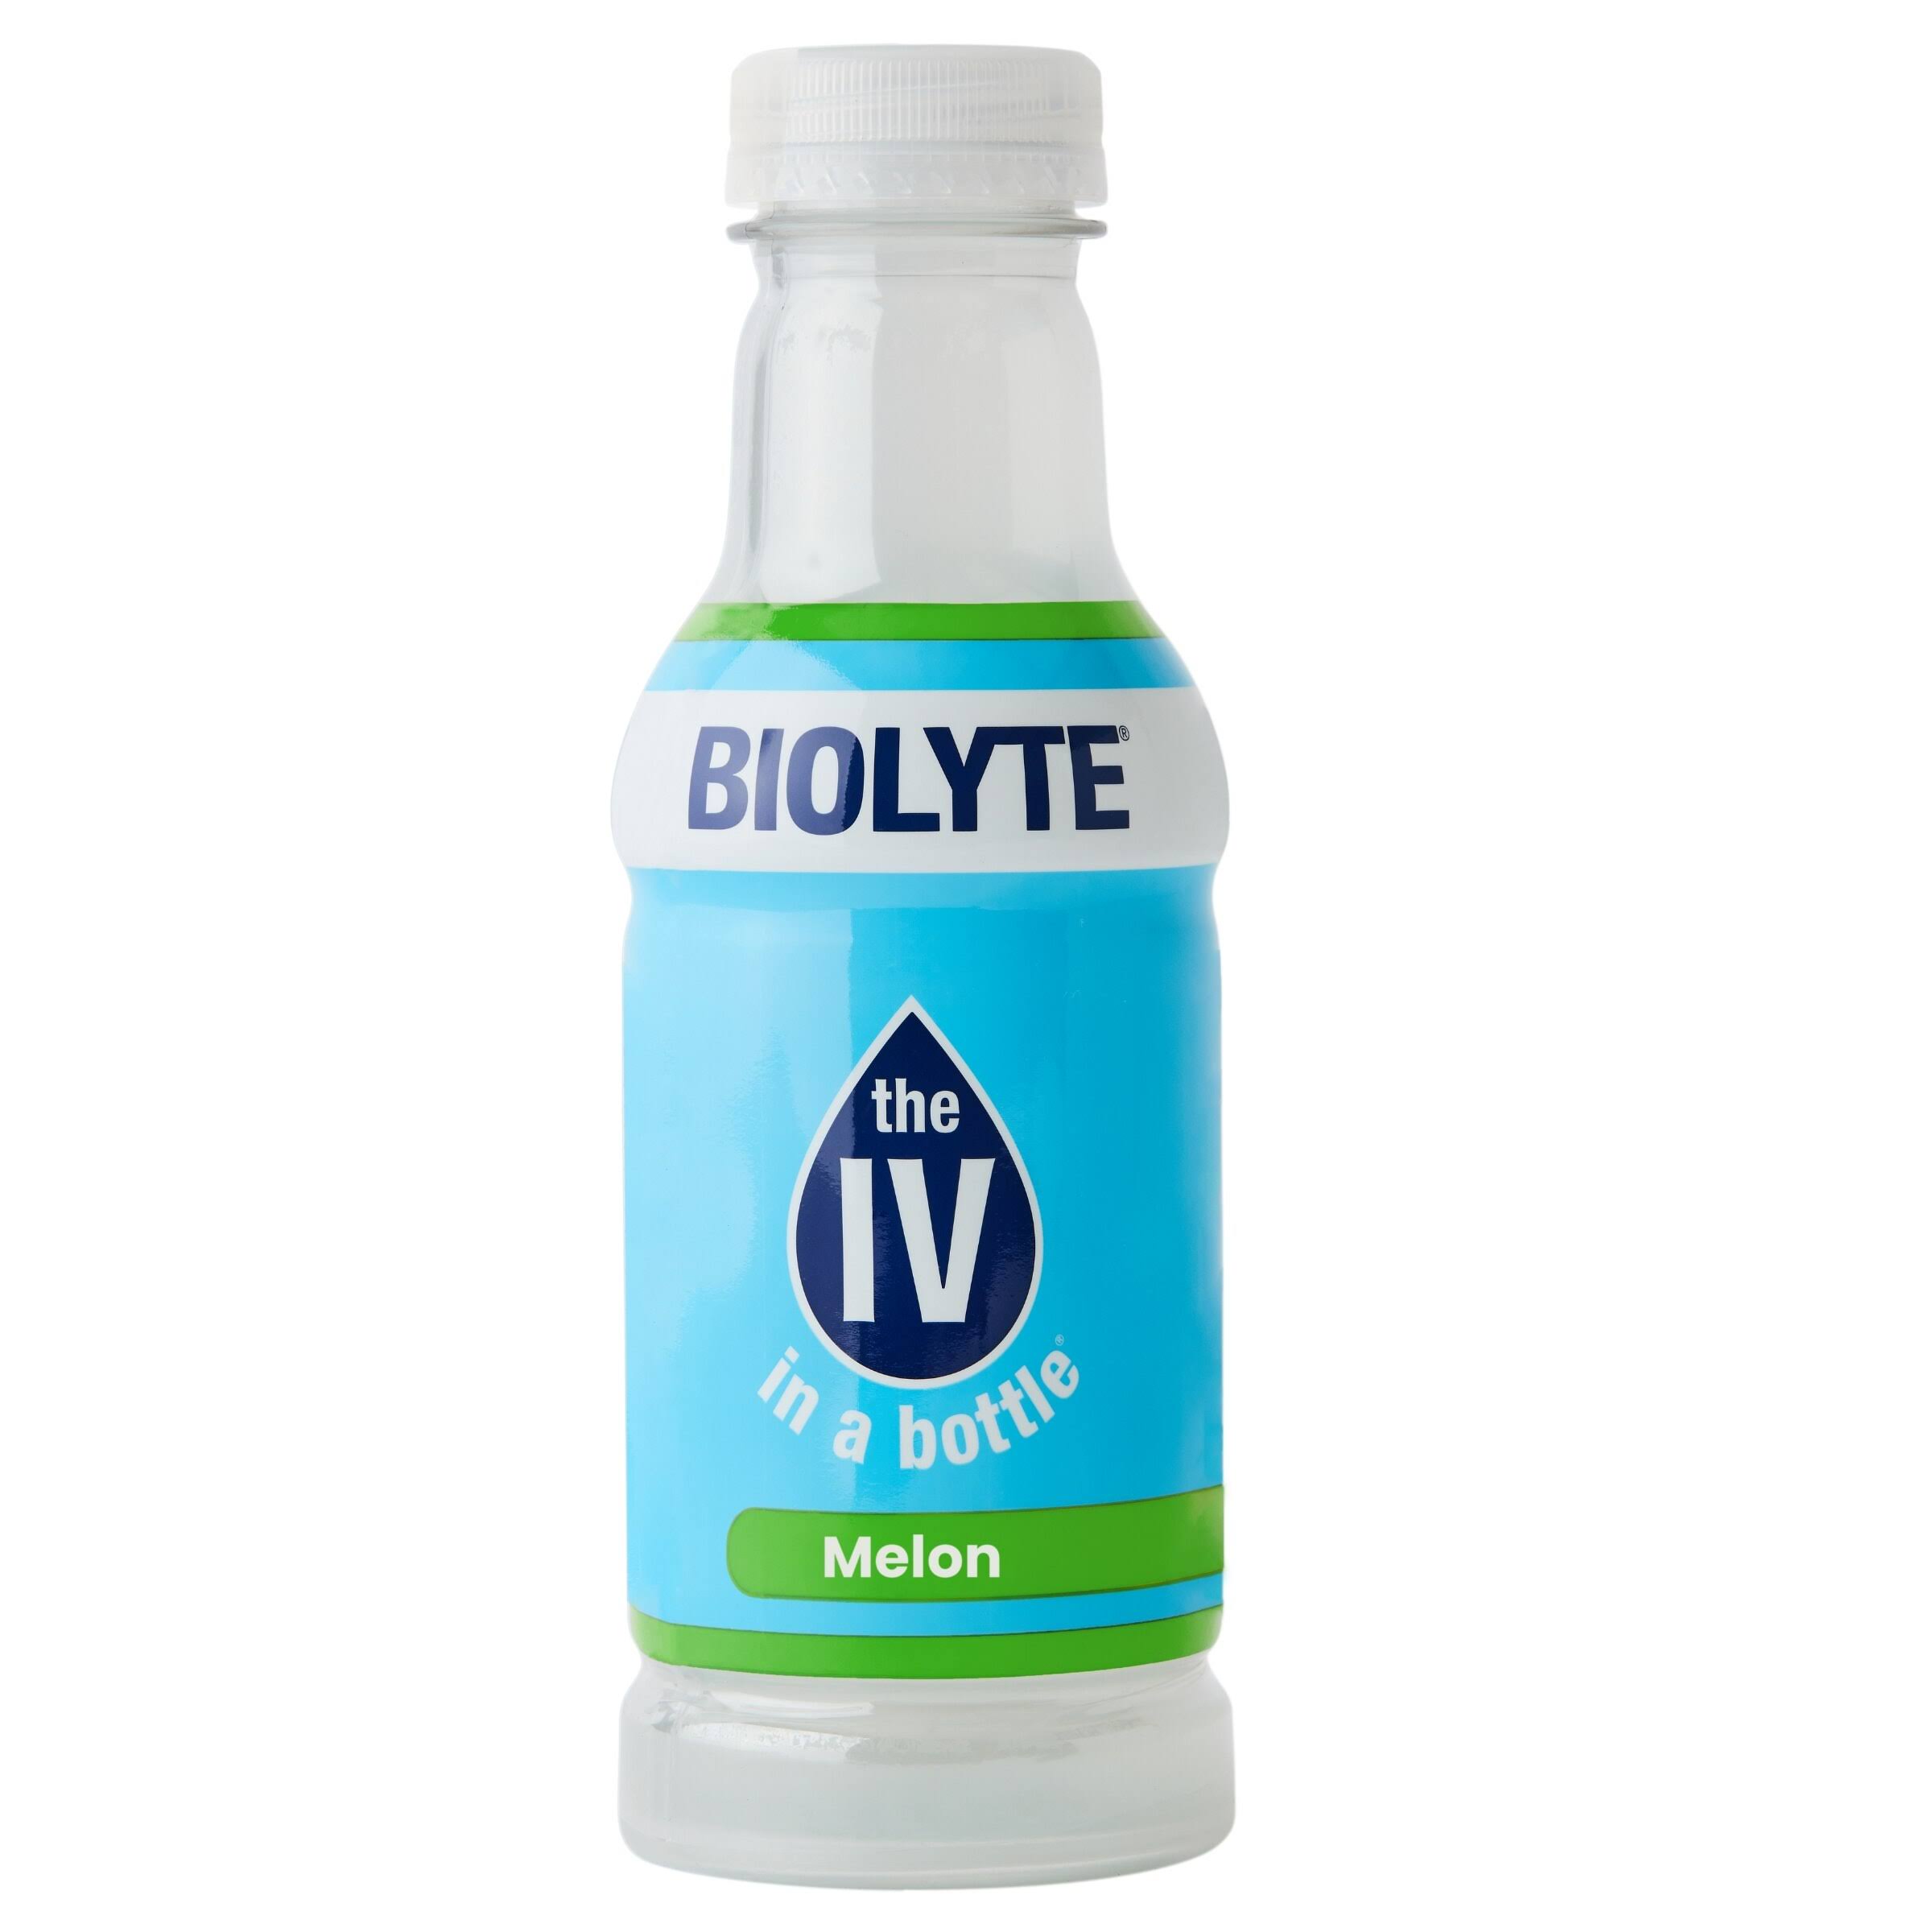 Biolyte Melon, The IV in A Bottle - 16.0 fl oz